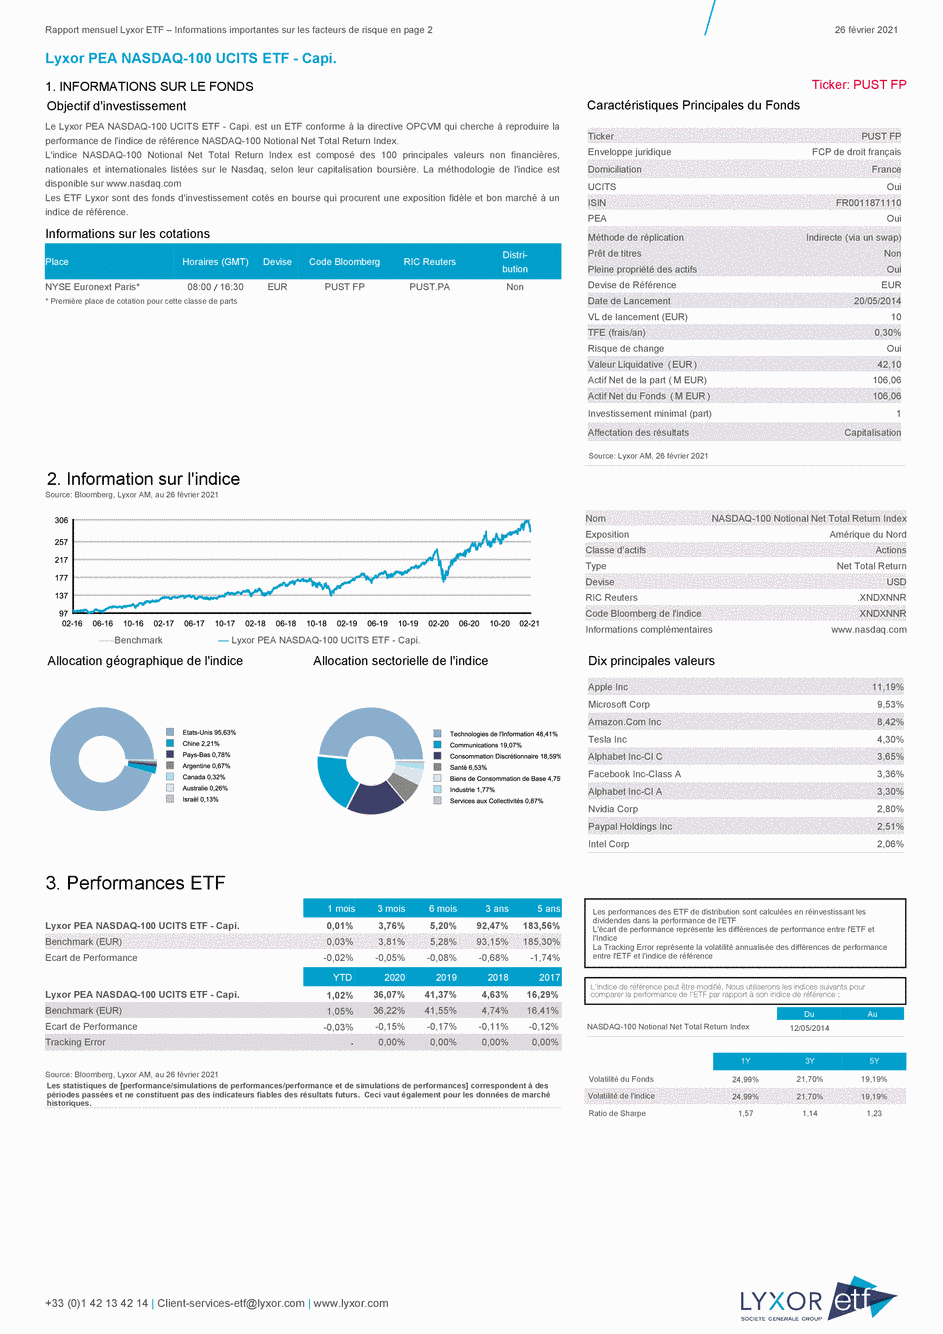 Reporting Lyxor PEA NASDAQ-100 UCITS ETF - Capi. - 26/02/2021 - French